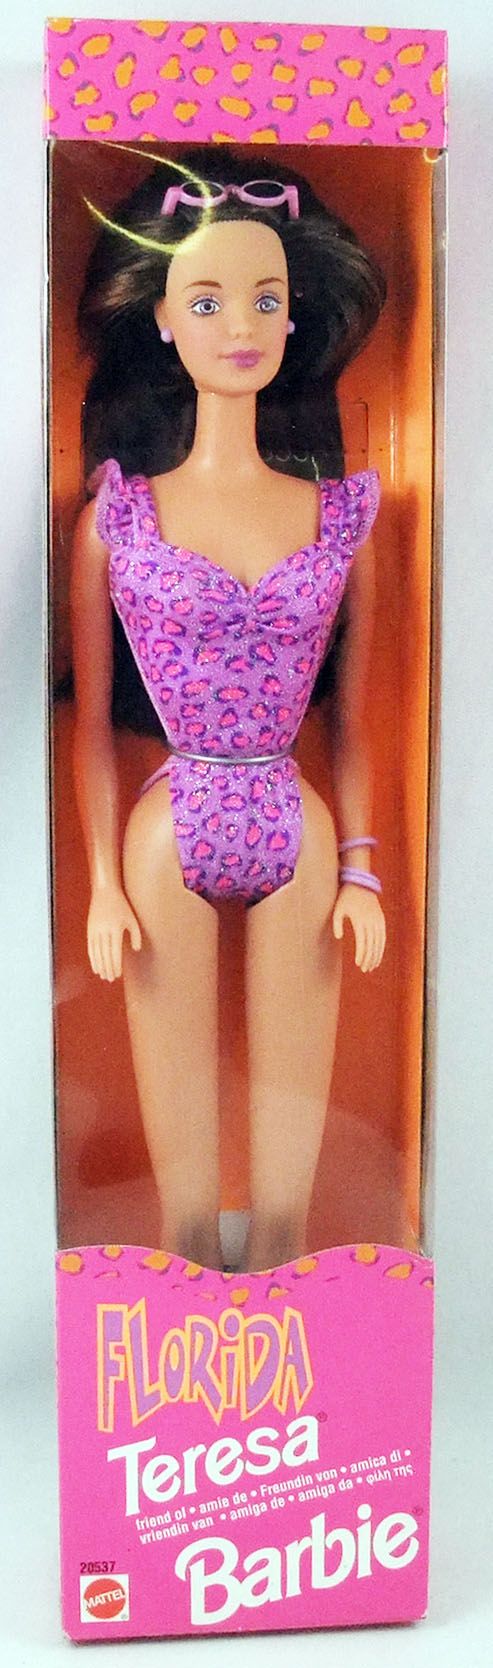 redde Uplifted deres Barbie - Florida Teresa - Mattel 1998 (ref.20537)